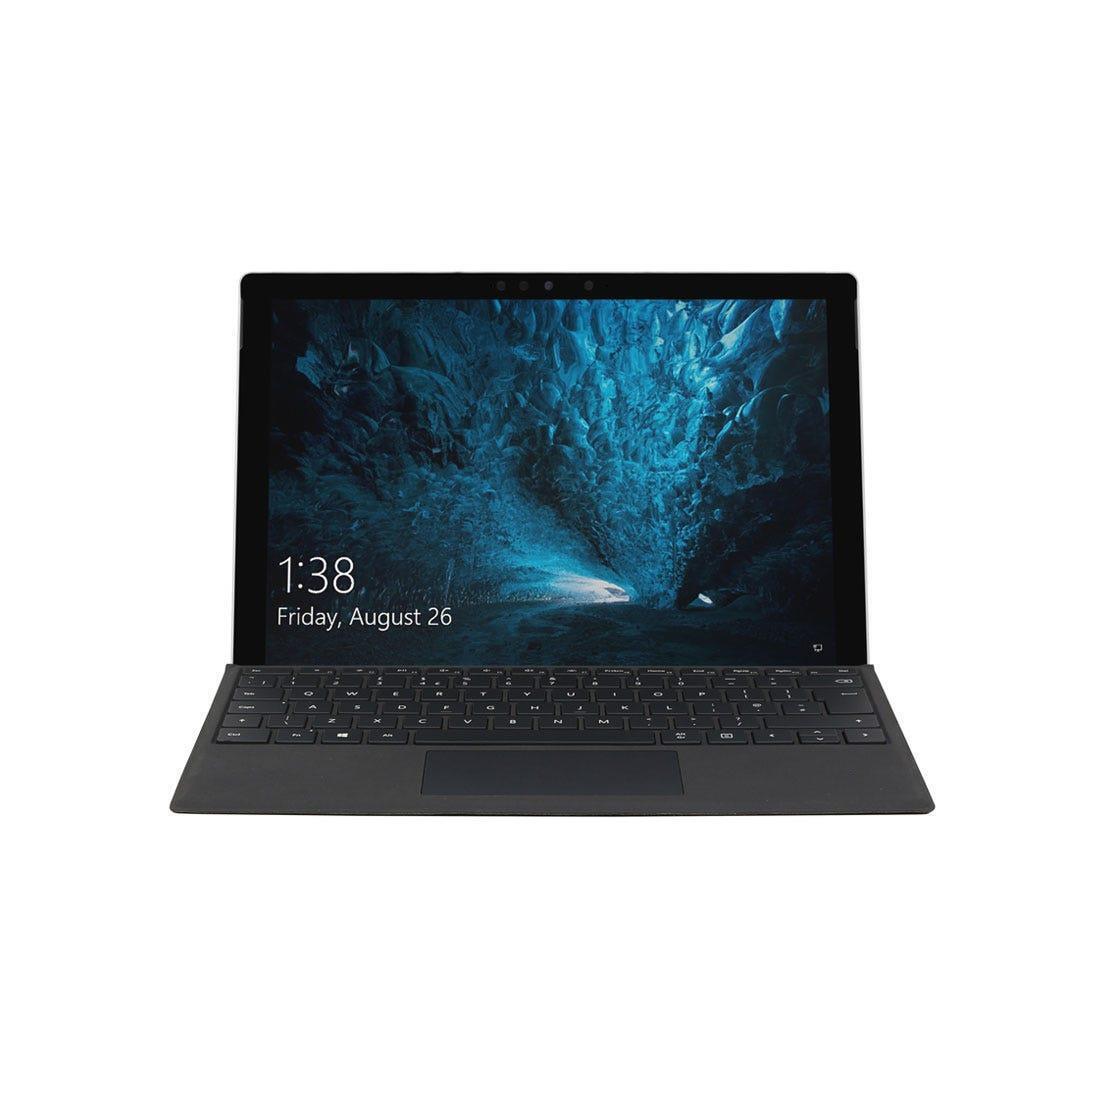 Microsoft Surface Pro 6 12.3" Laptop Intel Core i5-8350U 8GB RAM 256GB SSD - Black - Refurbished Excellent